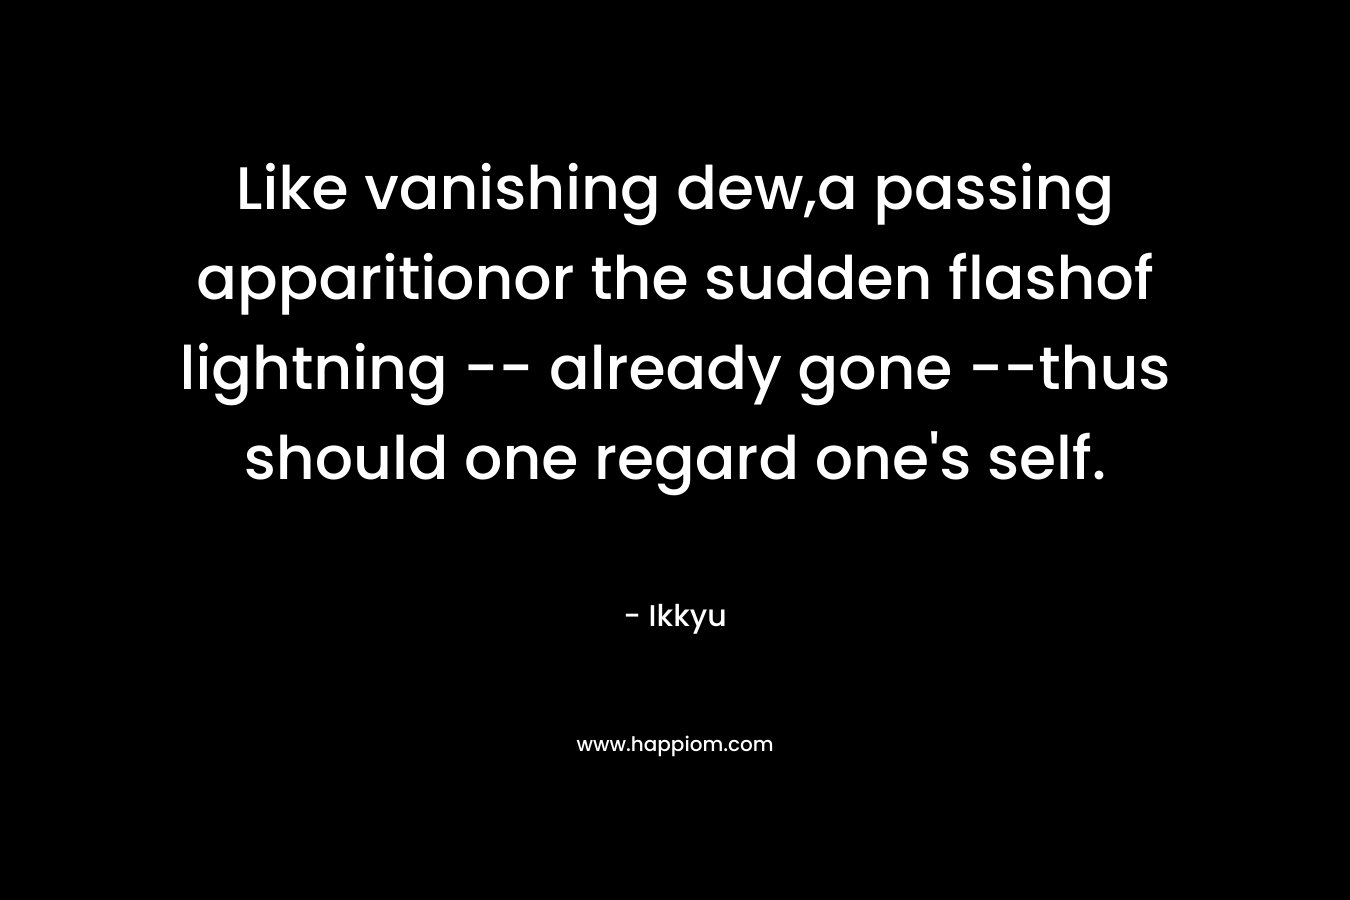 Like vanishing dew,a passing apparitionor the sudden flashof lightning — already gone –thus should one regard one’s self. – Ikkyu